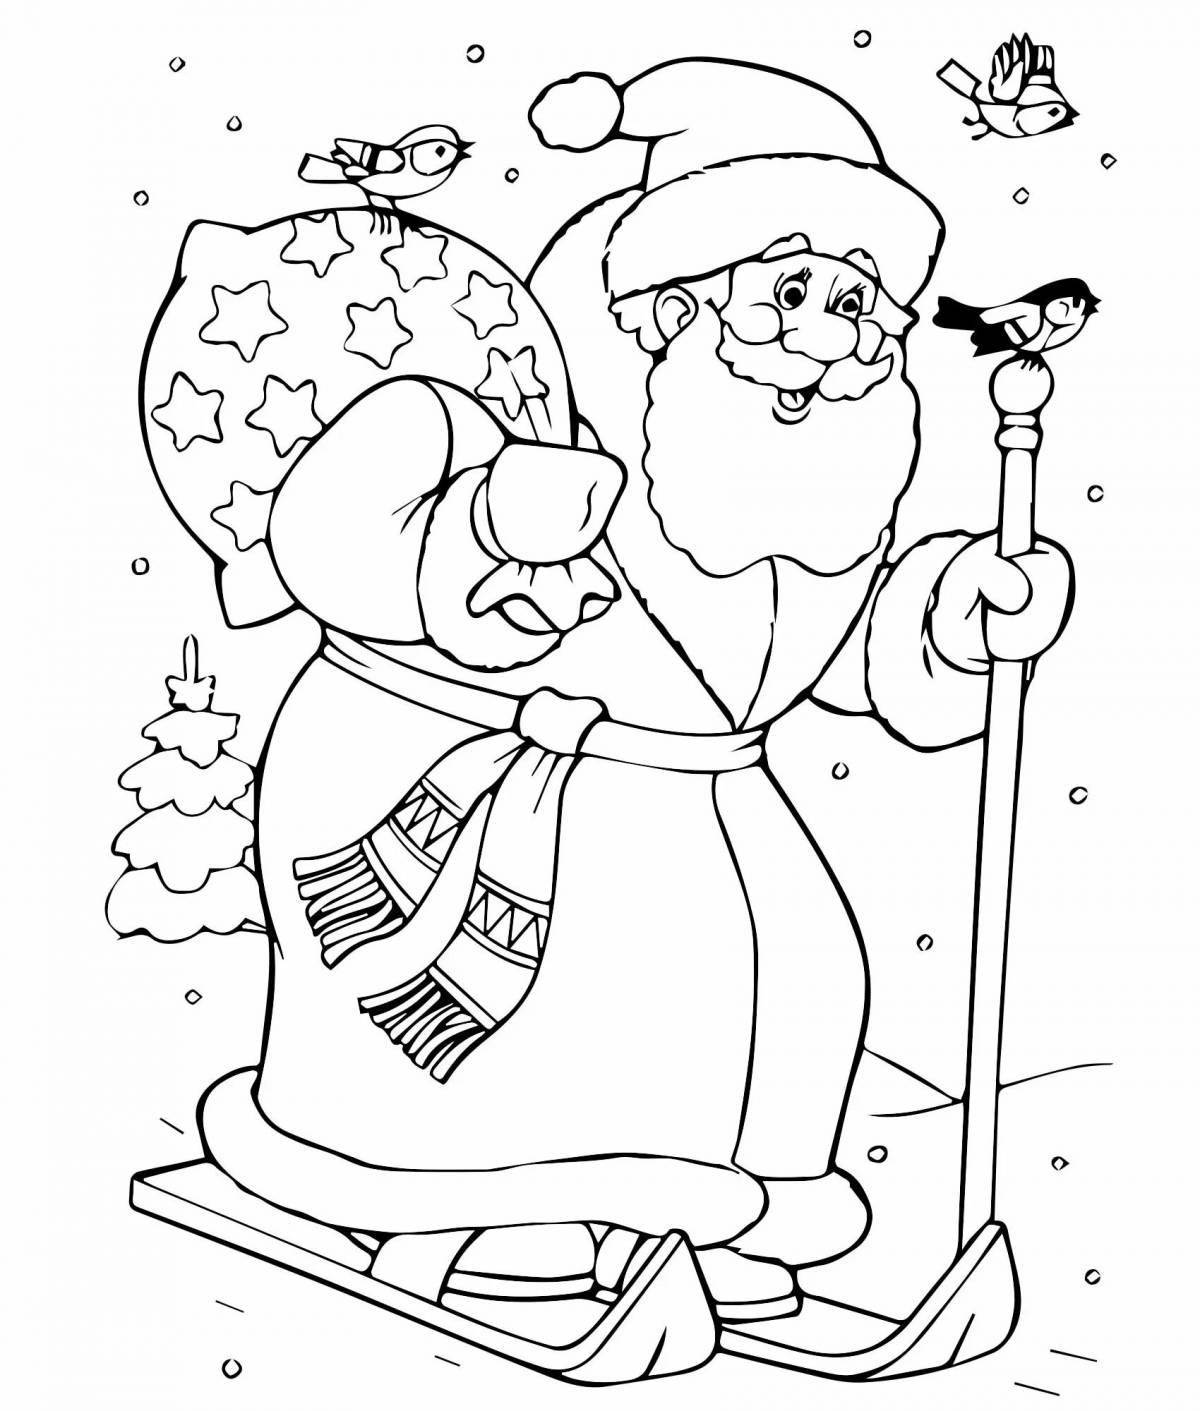 Magical santa claus coloring book for girls